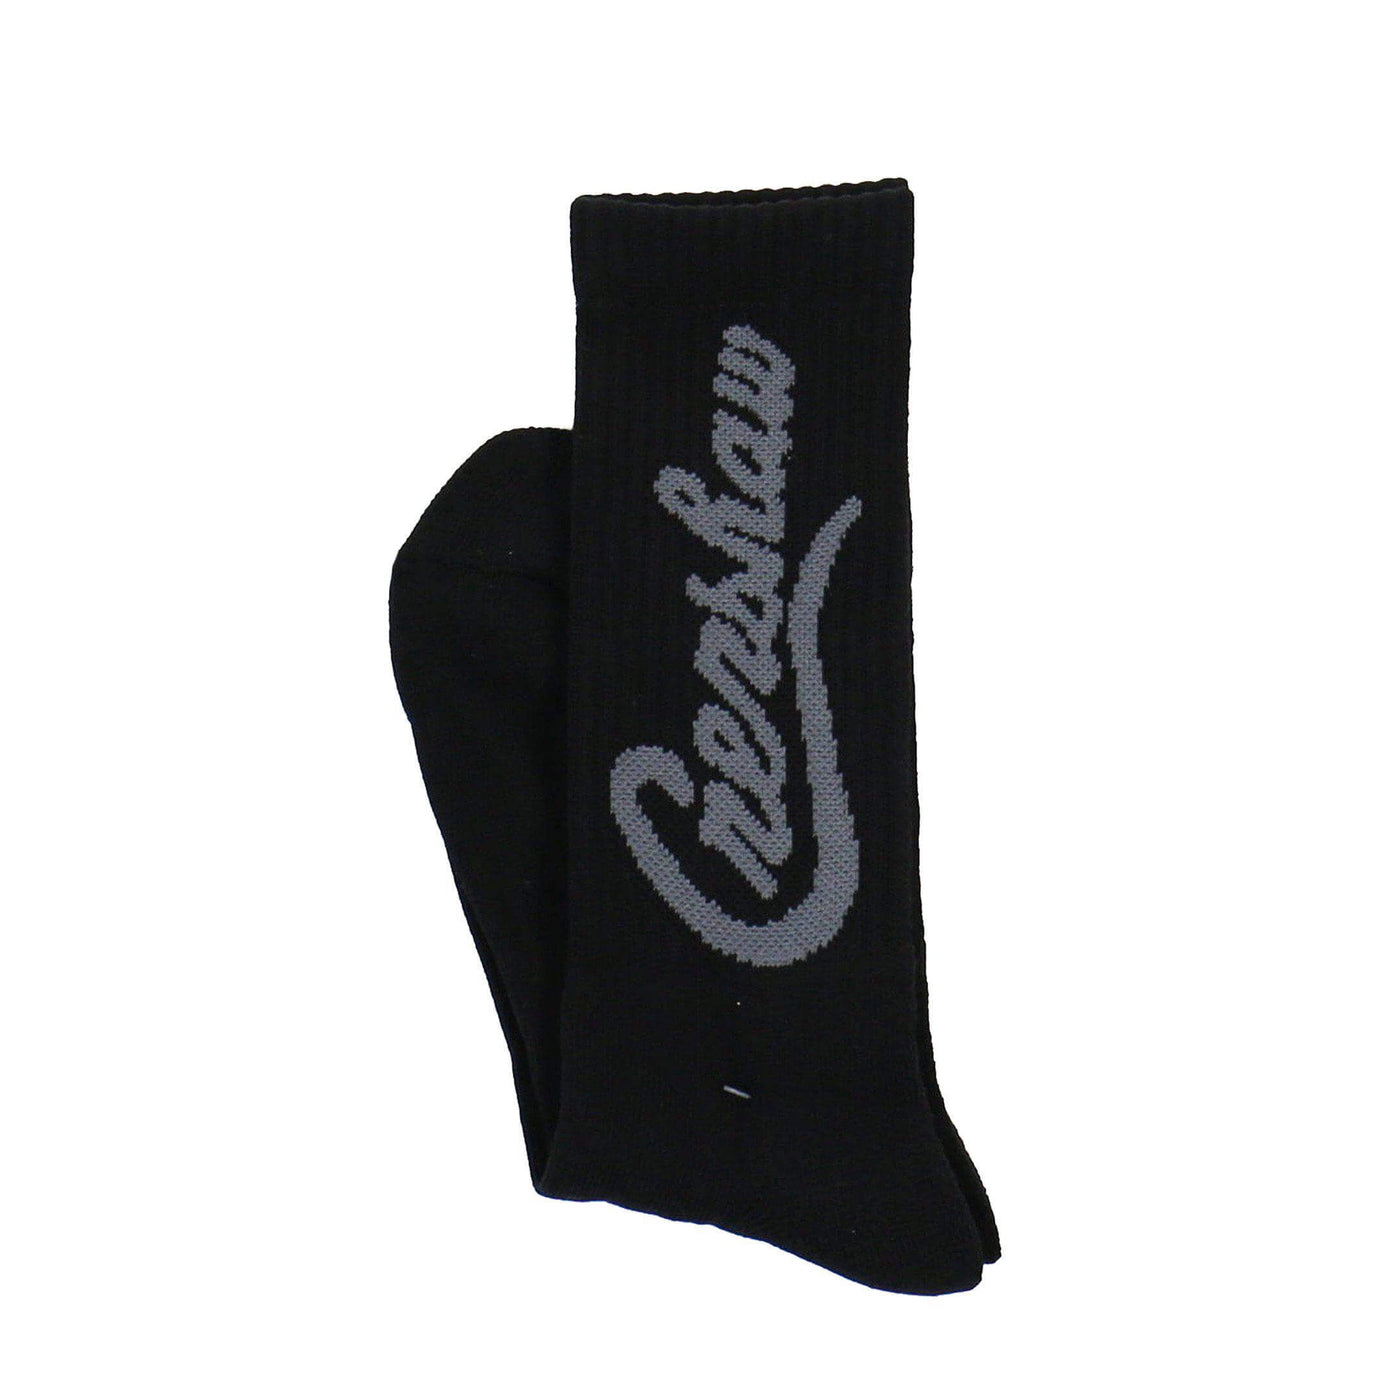 Crenshaw Socks - Black/Gray-The Marathon Clothing